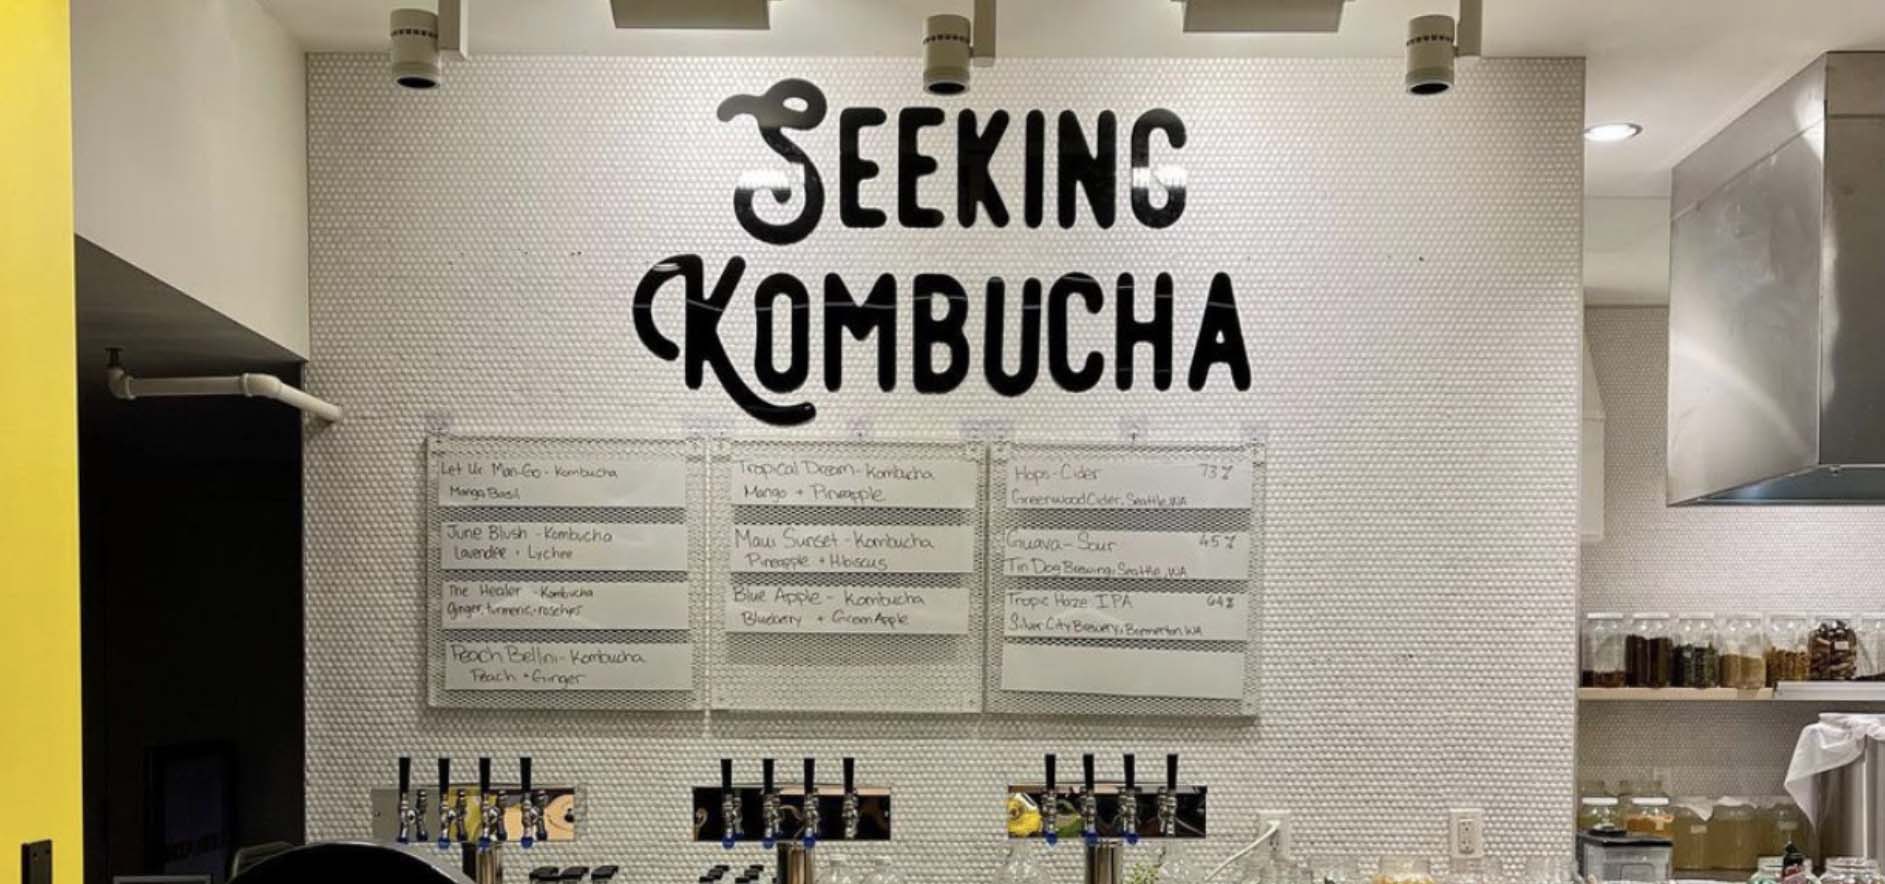 Kombucha shop menu board with taps below.